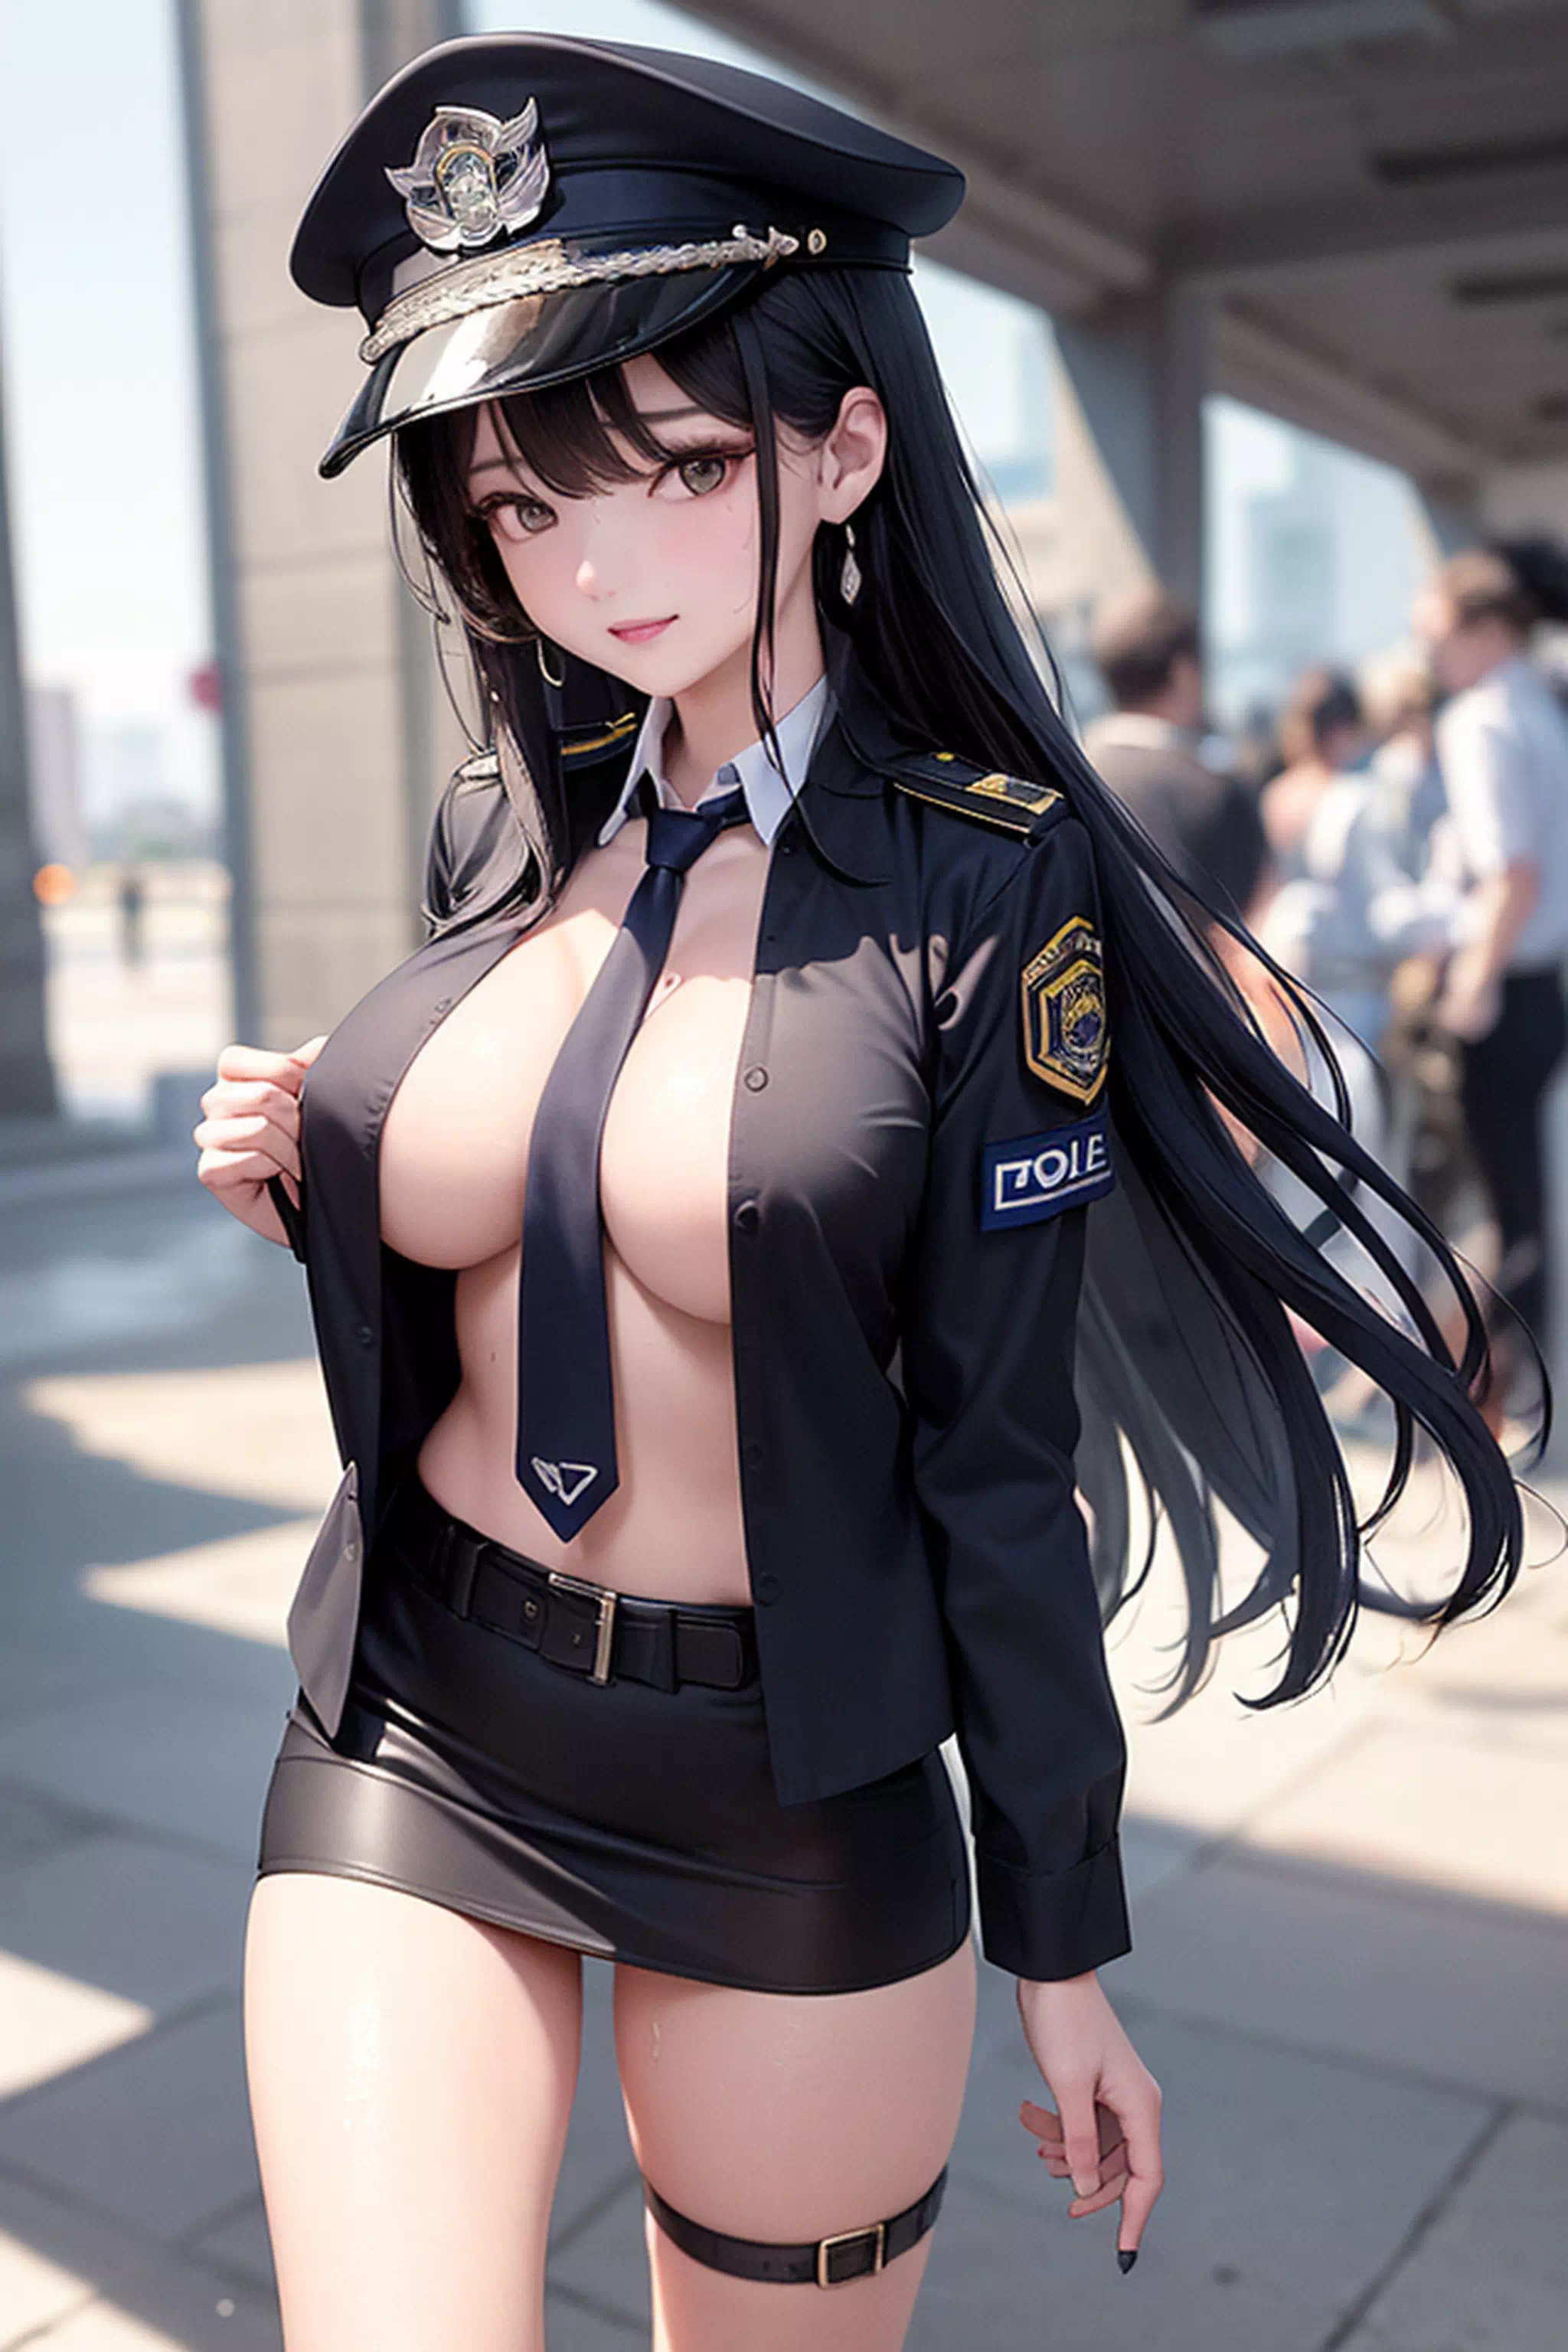 Sexy policewoman